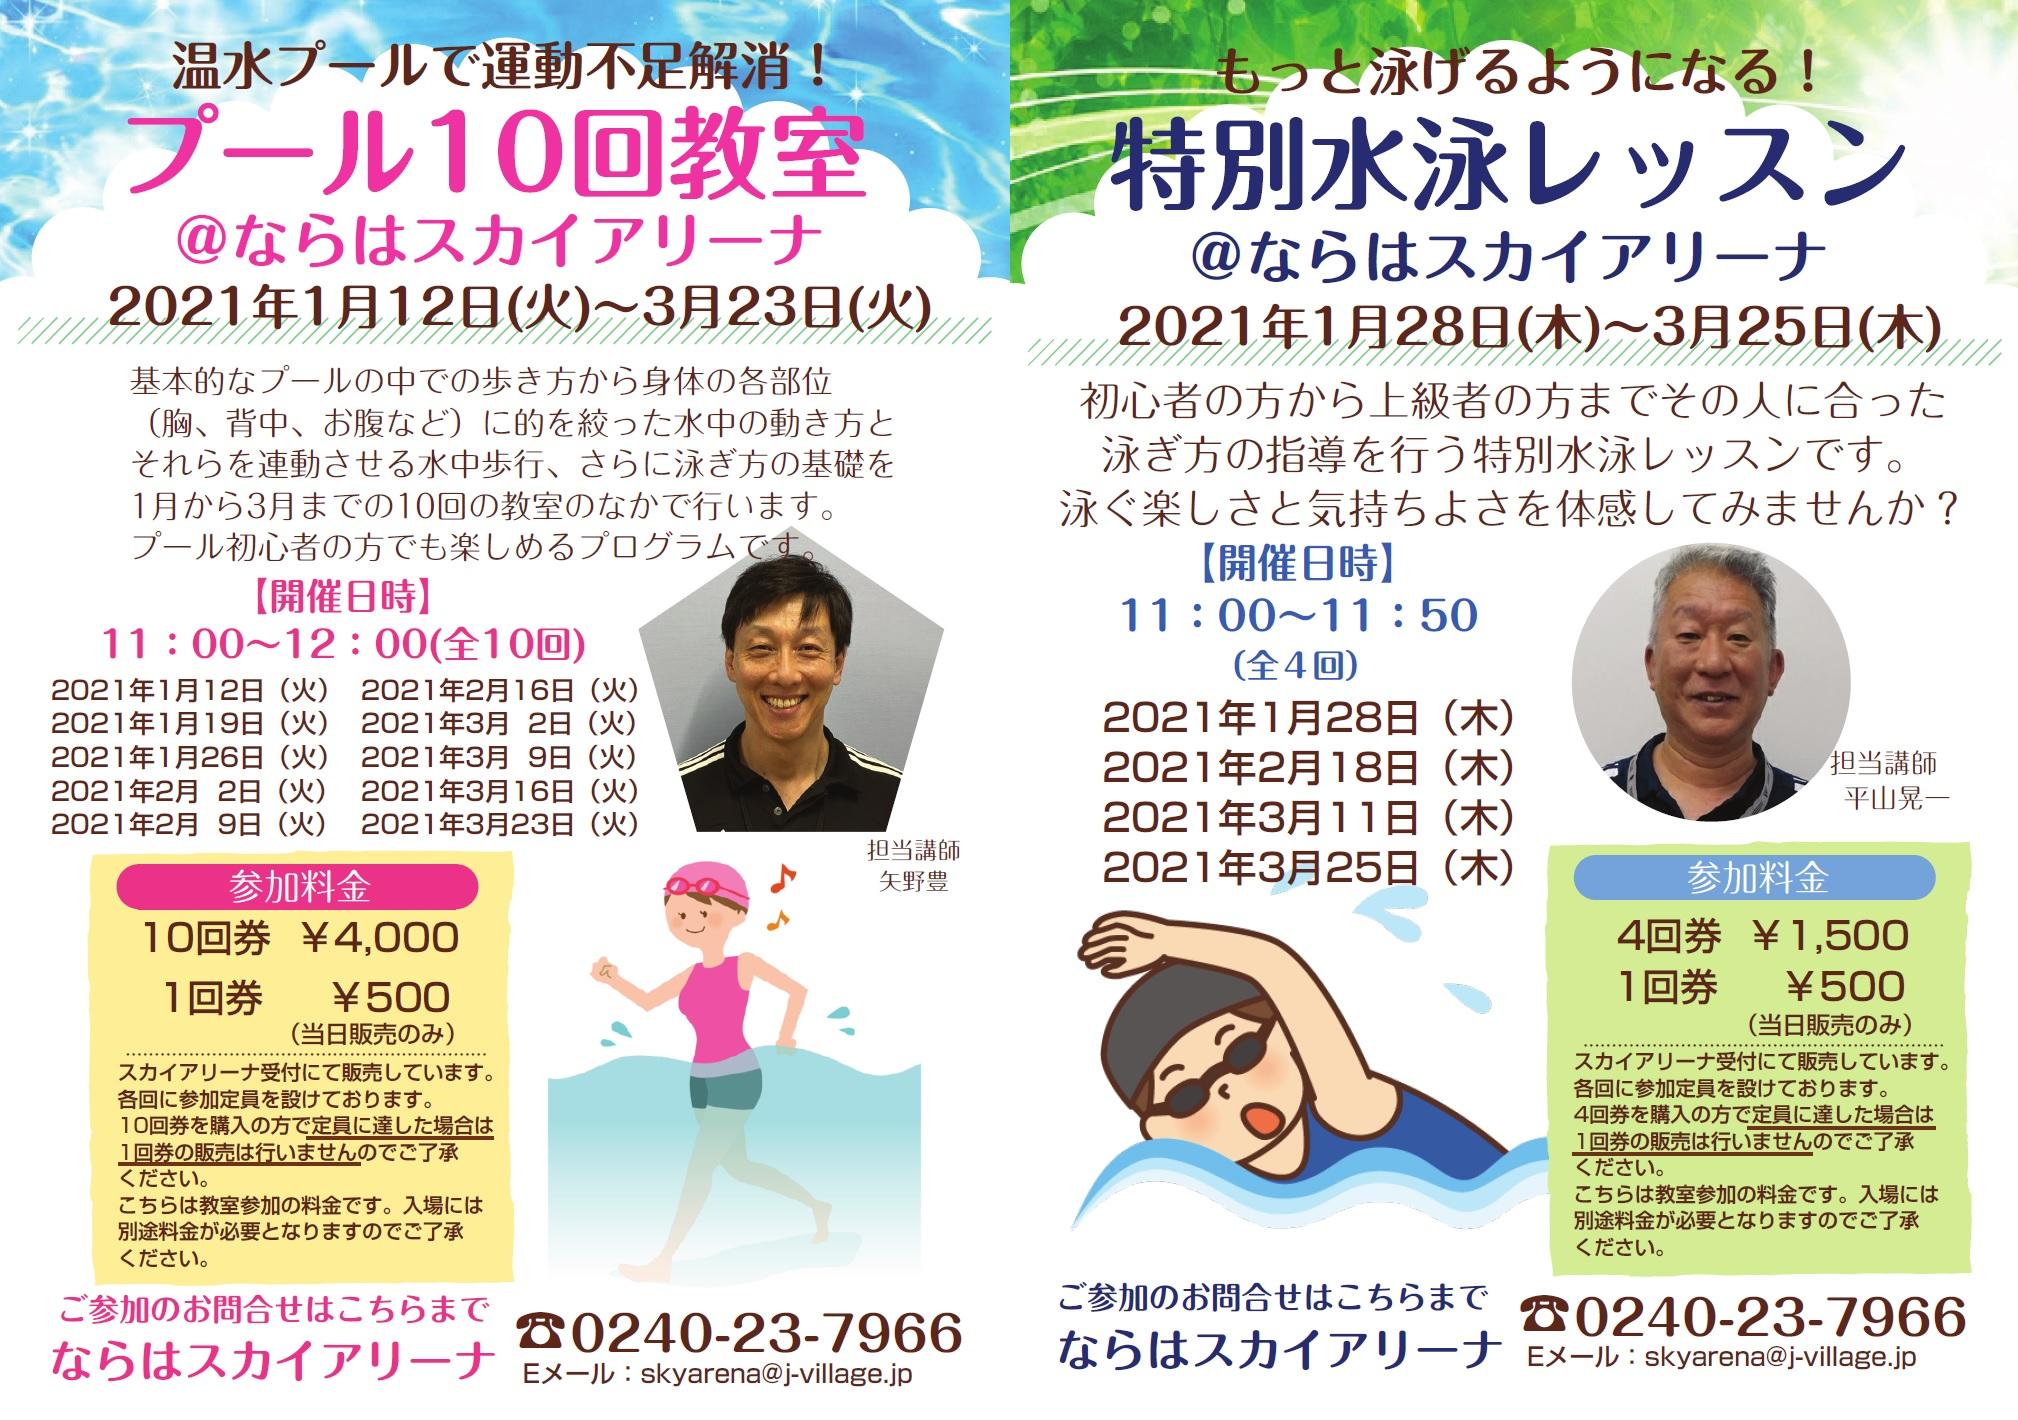 https://www.naraha-skyarena.jp/news/Files/2020/12/5192f863e1e444dabafa3eca21869b99_3.jpg